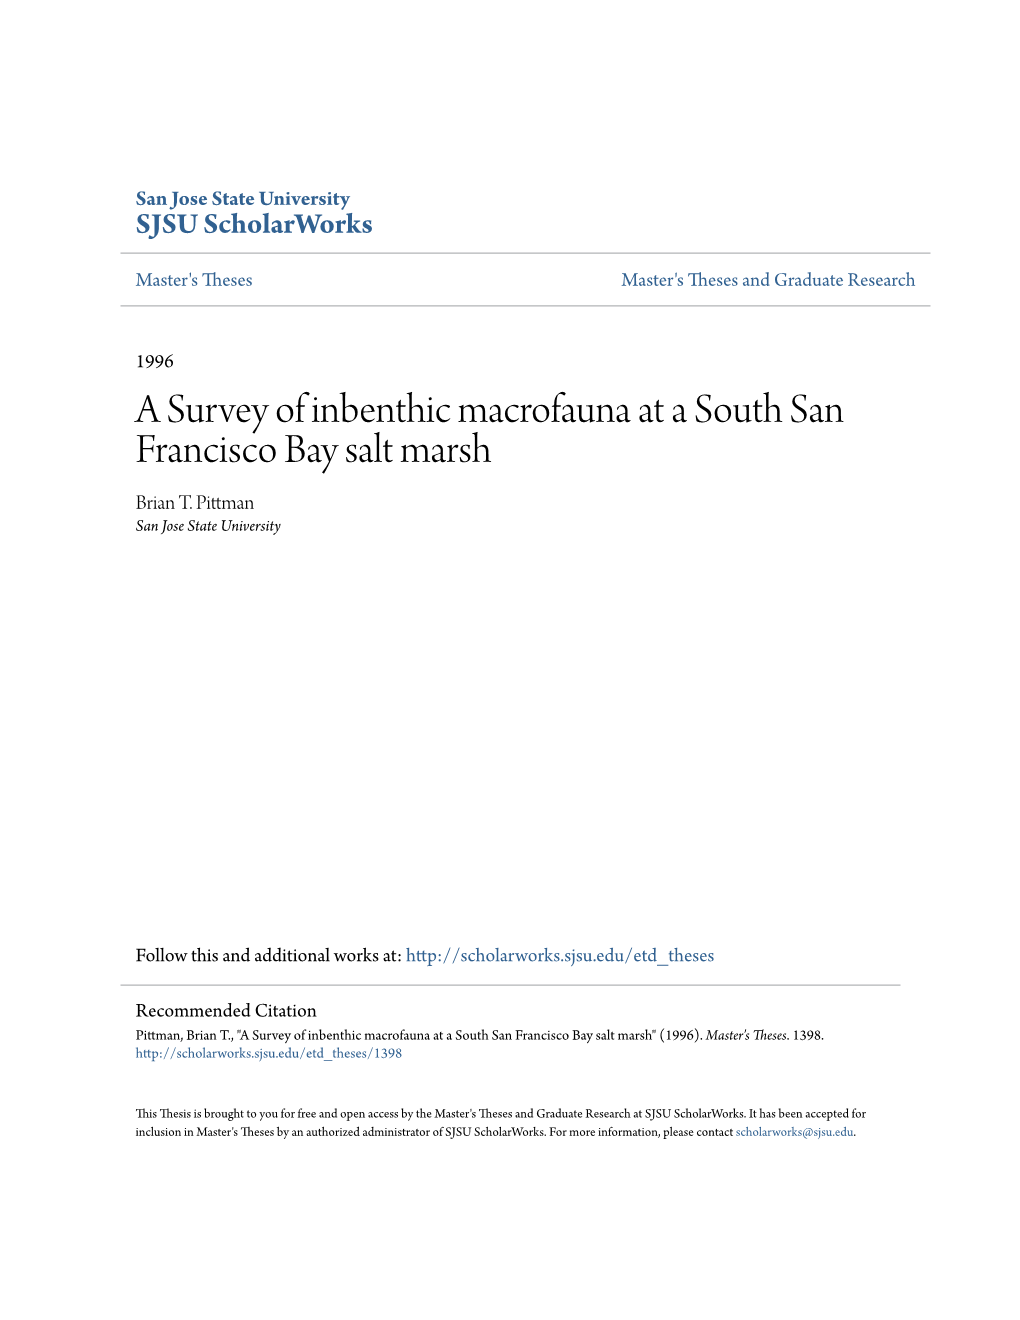 A Survey of Inbenthic Macrofauna at a South San Francisco Bay Salt Marsh Brian T